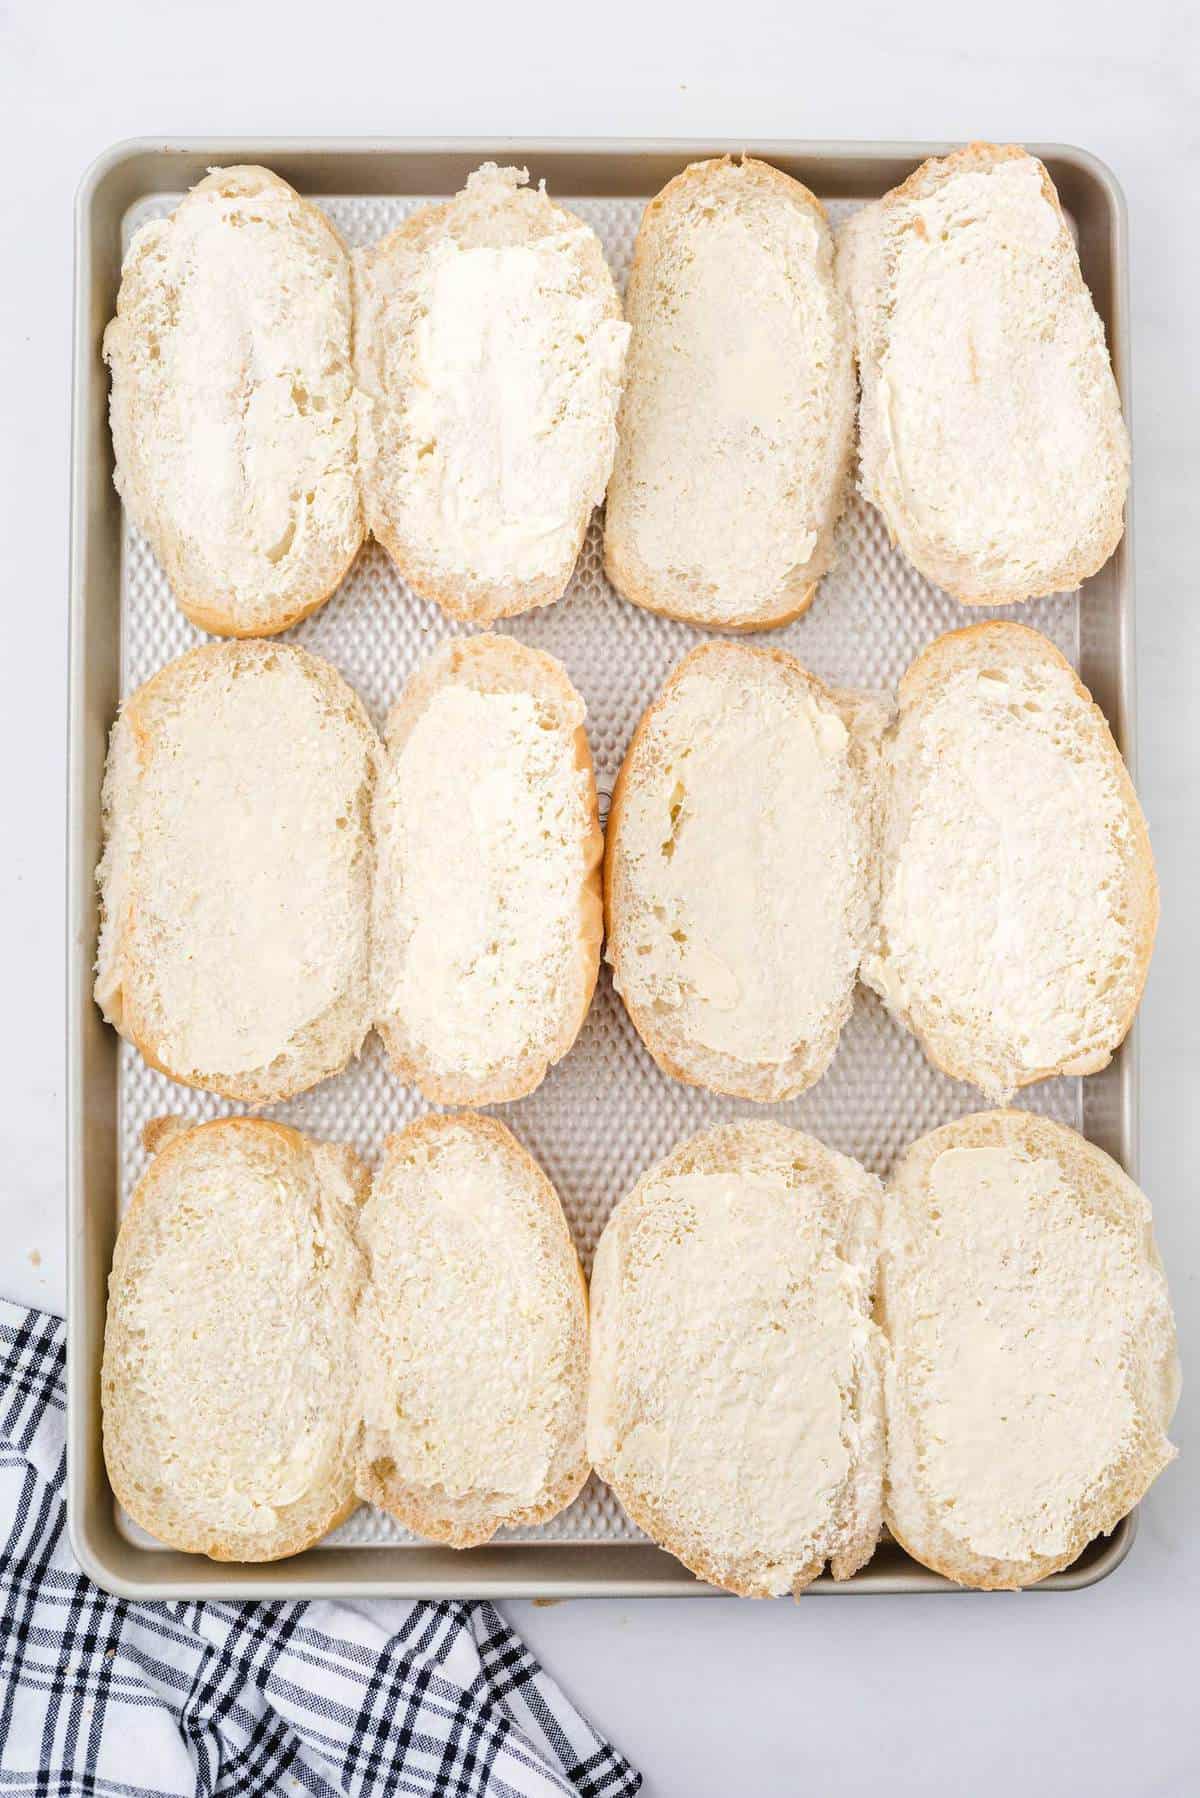 butter on hoagie buns on top of baking sheet